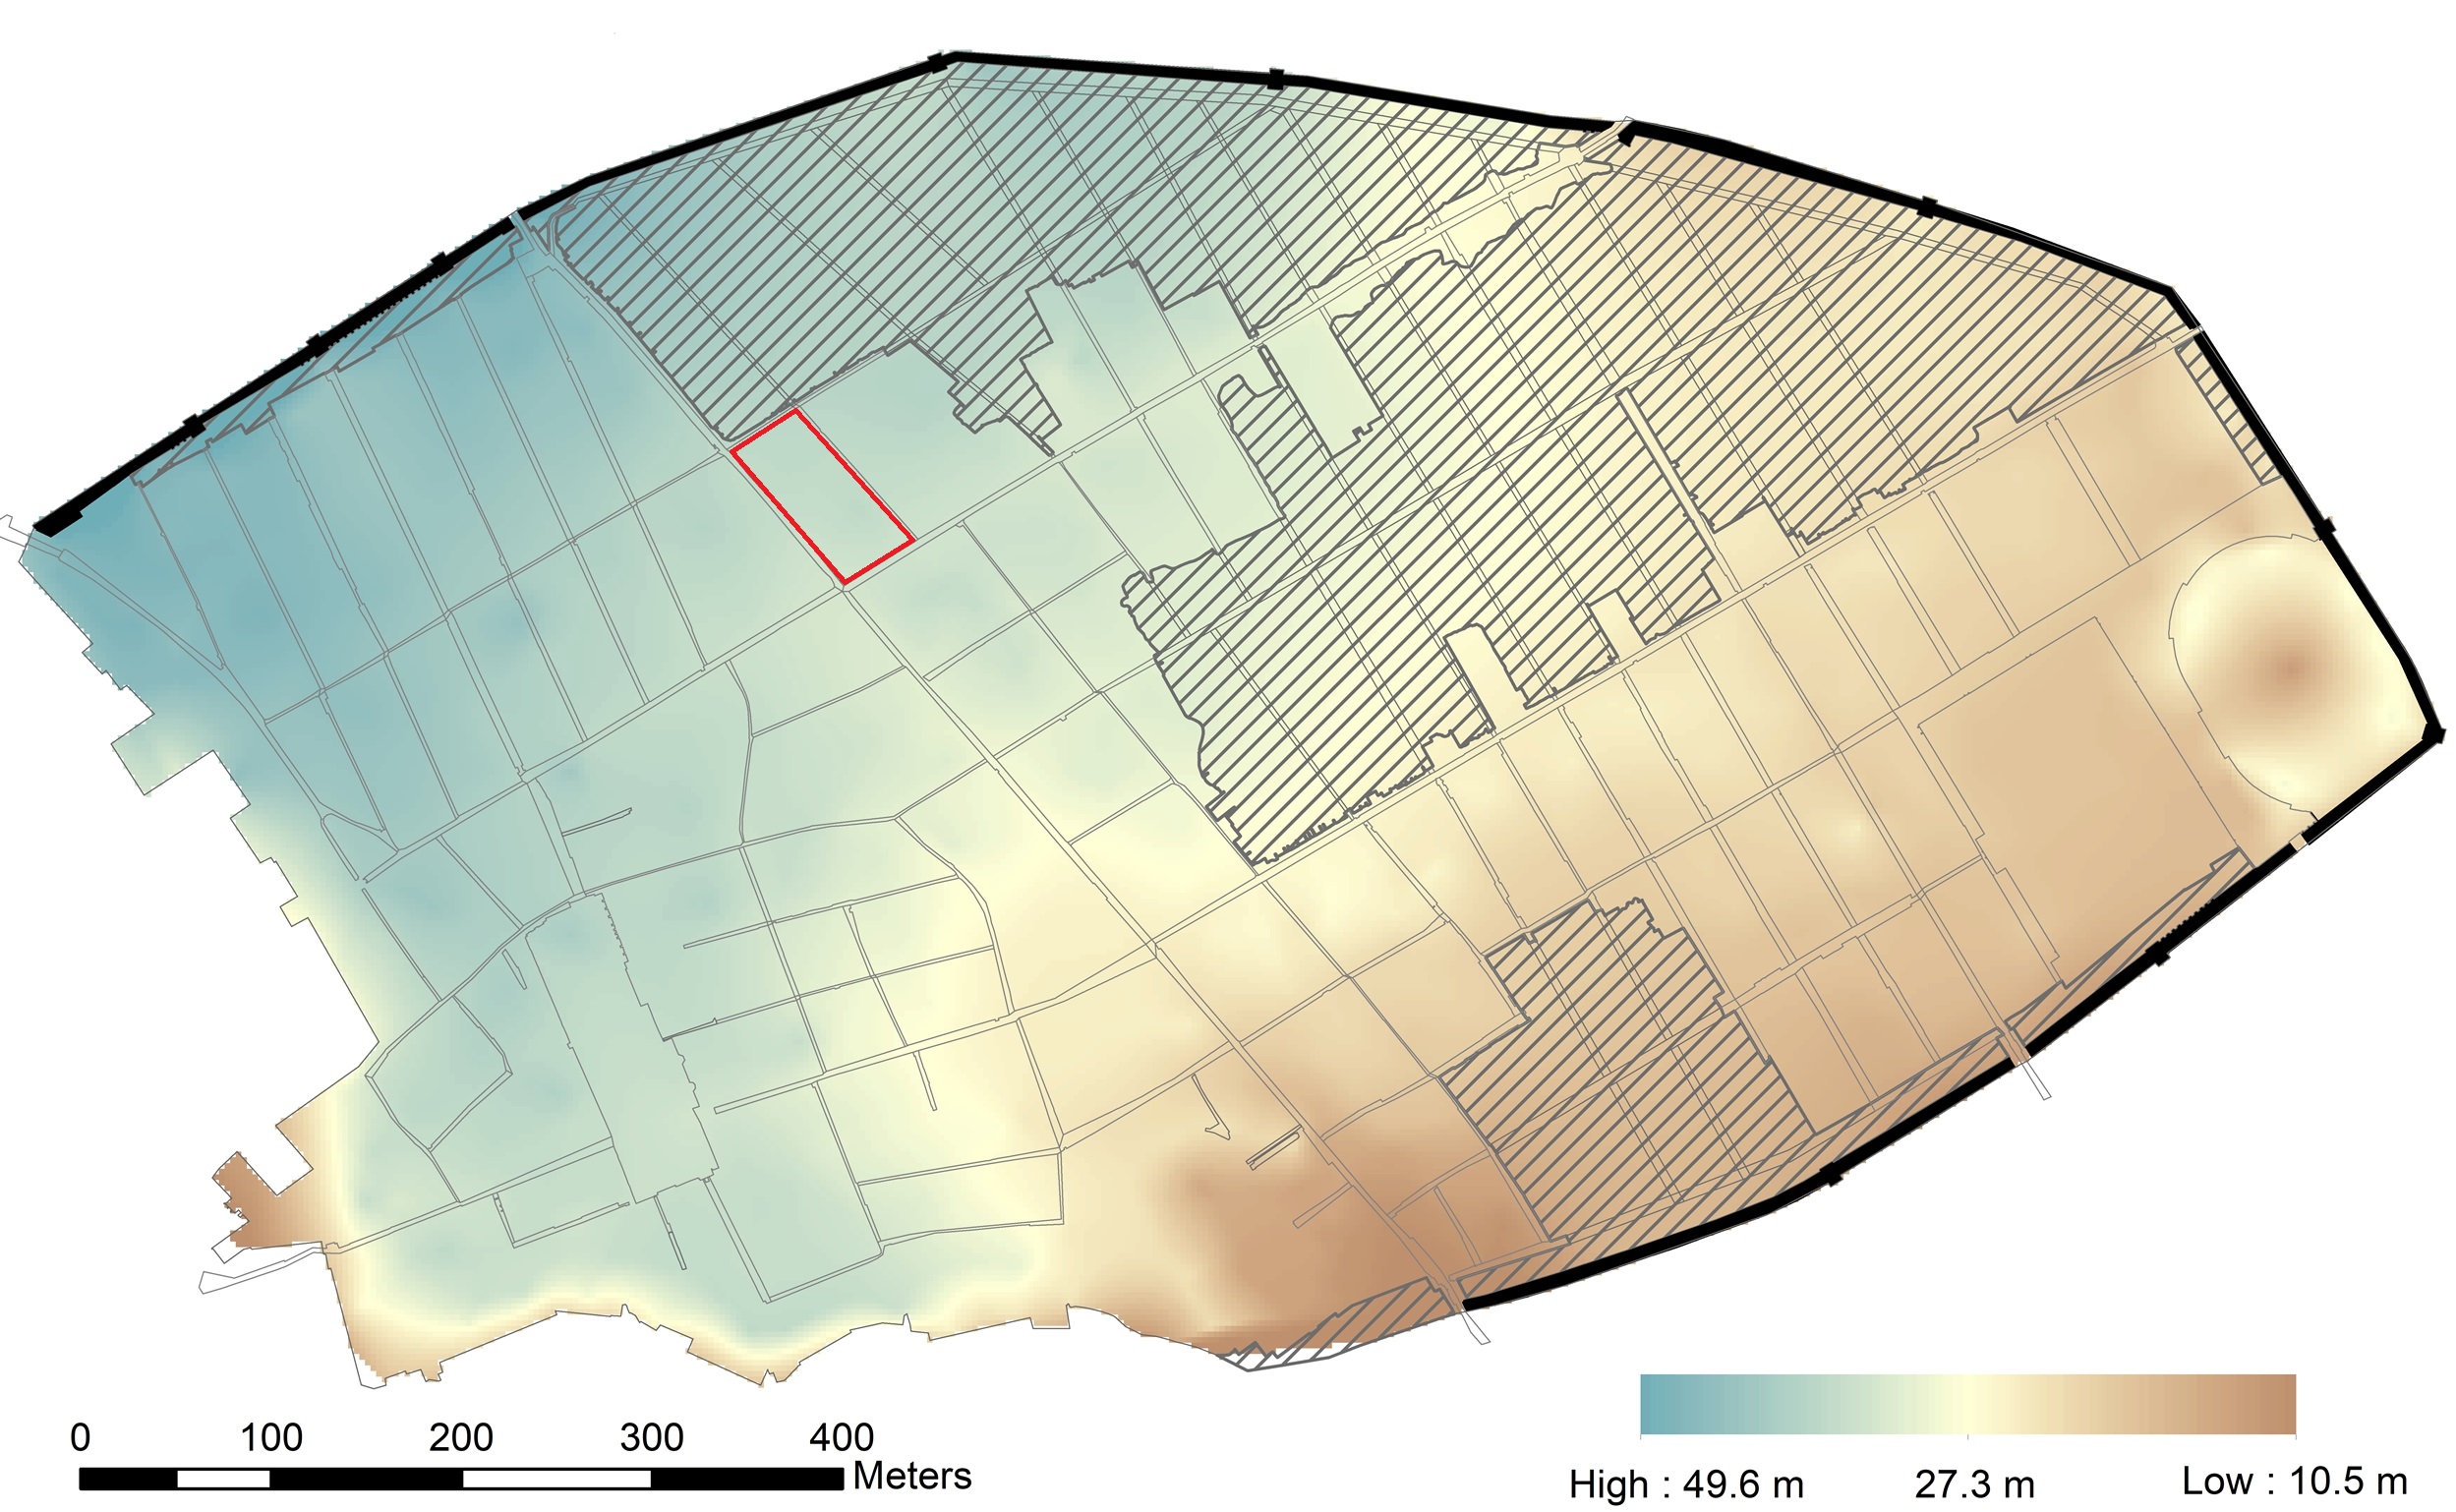 Pompeii Digital elevation model, Notarian, Matthew. (2021). Pompeii - Digital Elevation Model (DEM) with streets and unexcavated zones. Zenodo. https://doi.org/10.5281/zenodo.4560551. Insula V 1 marked in red.